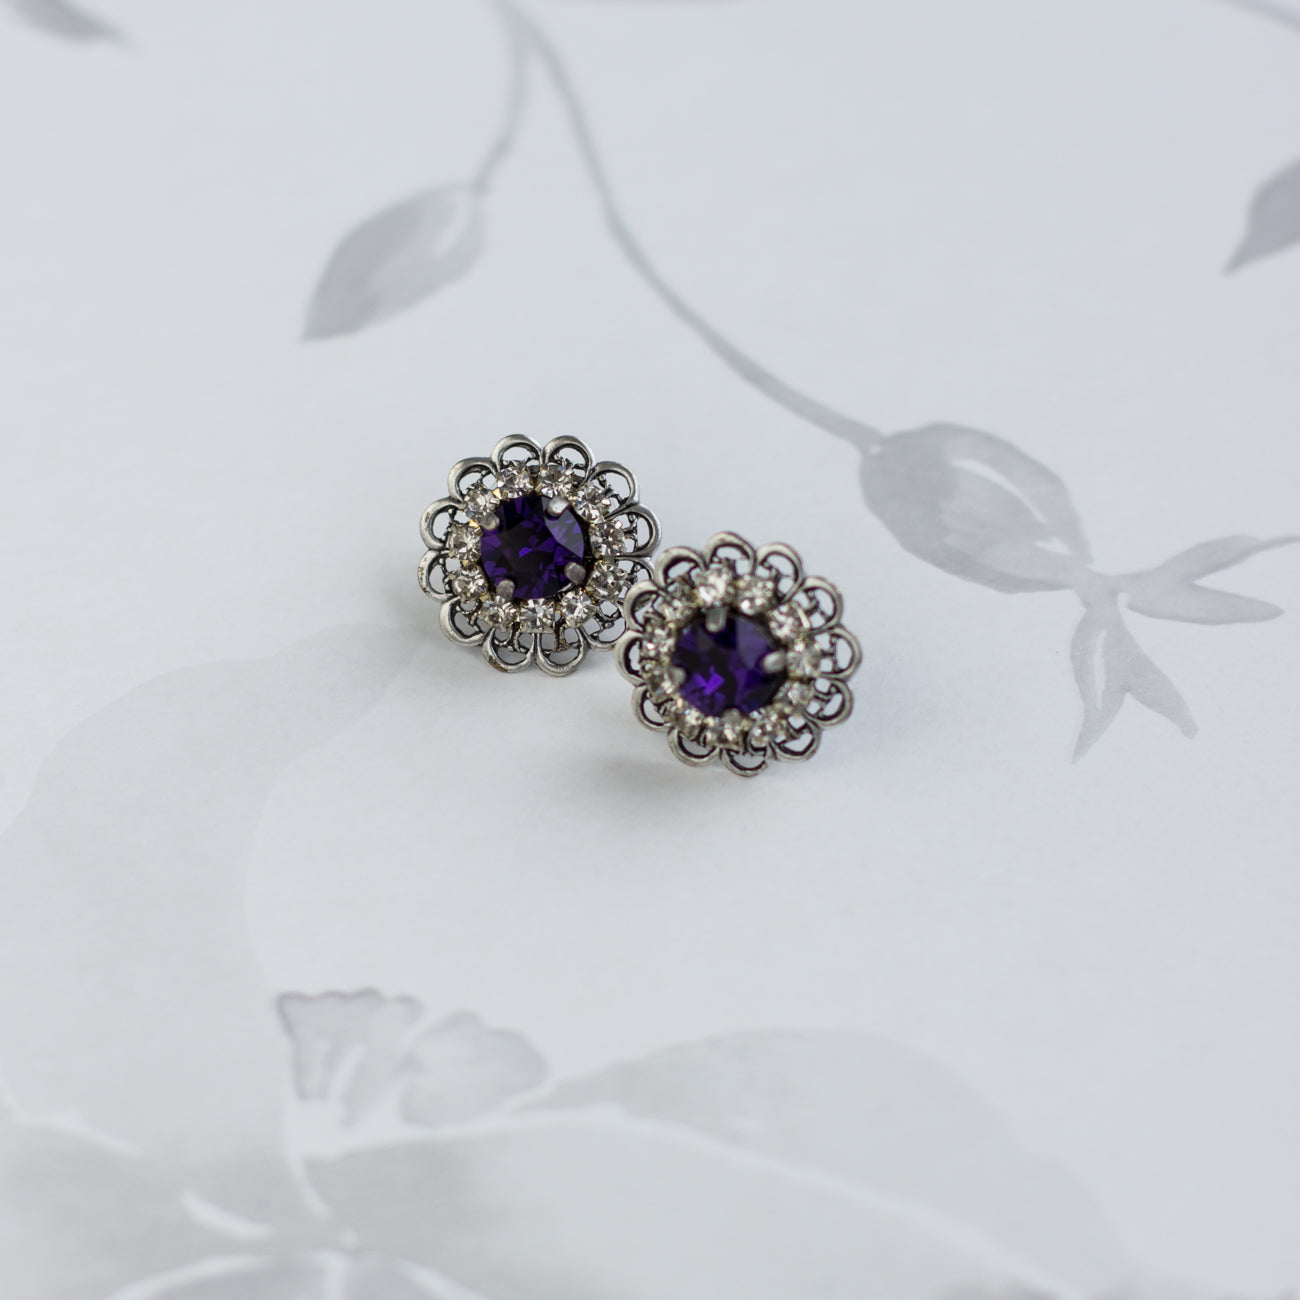 Small purple earrings for any occasion. Timeless elegance - Swarovski crystal stud earrings. Purple crystal jewelry. Rhinestone accessories